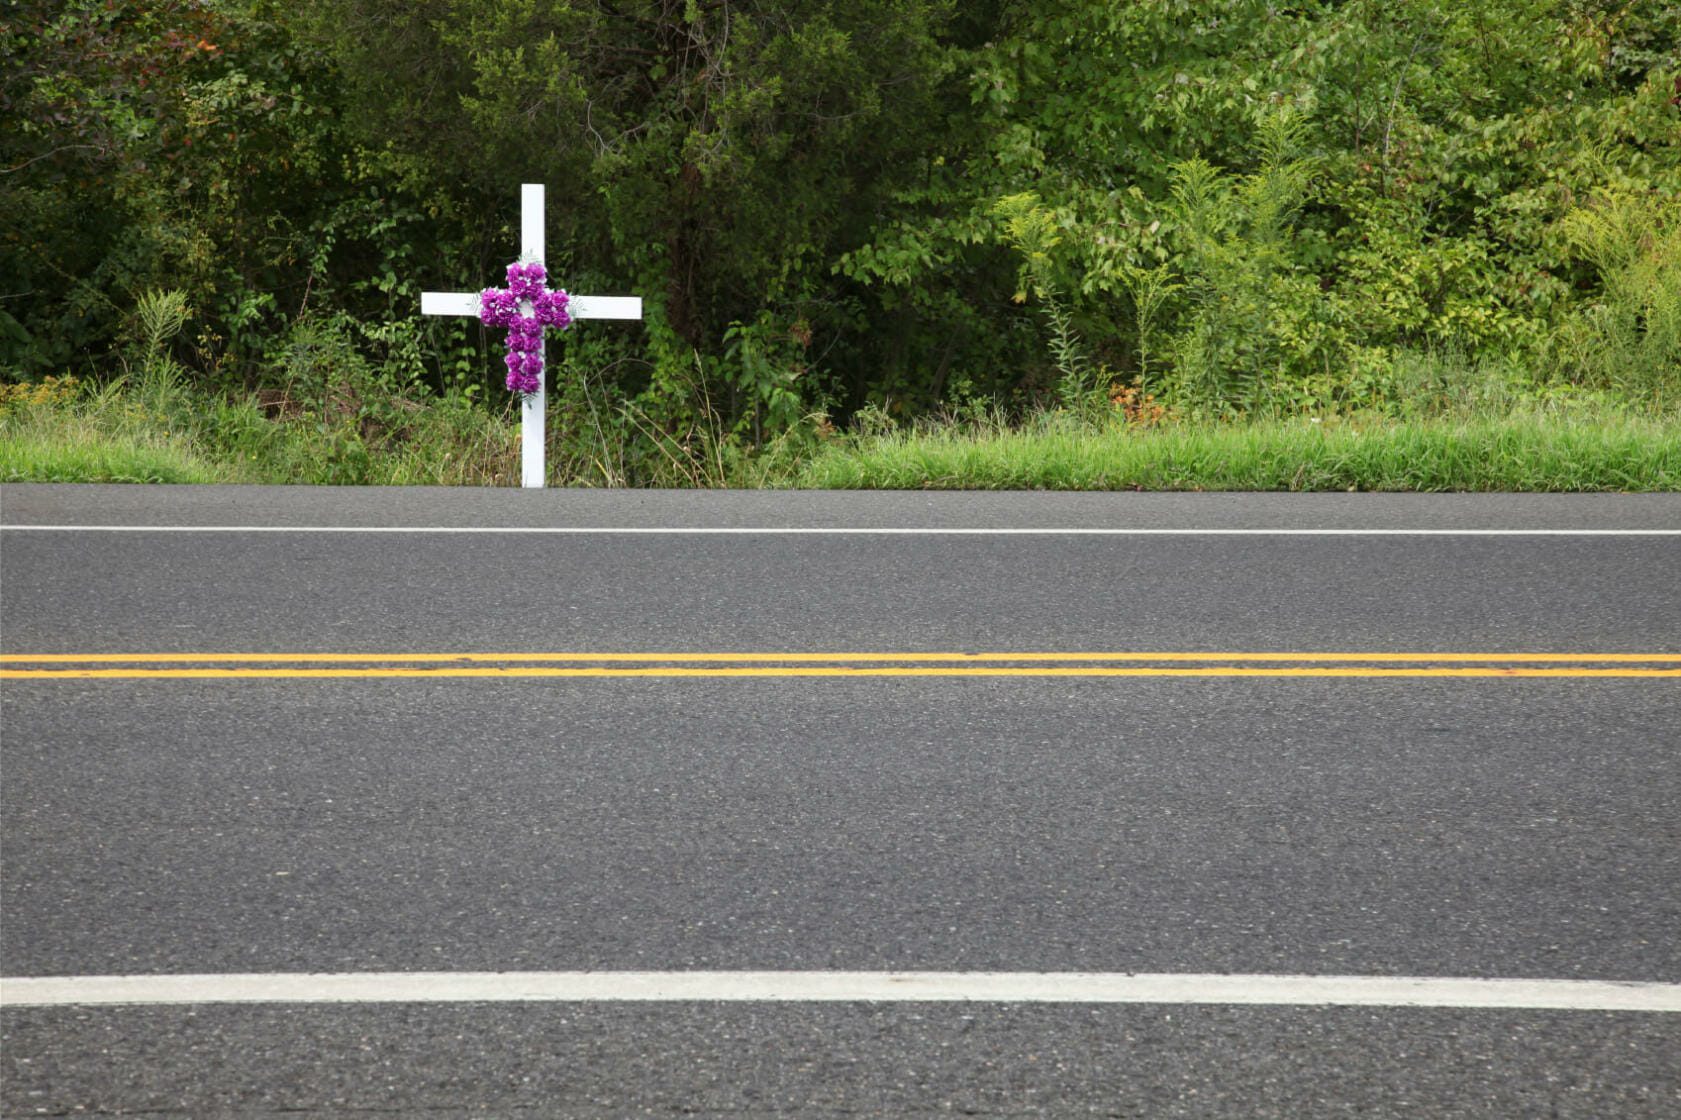 wooden cross roadside memorial for car crash victim